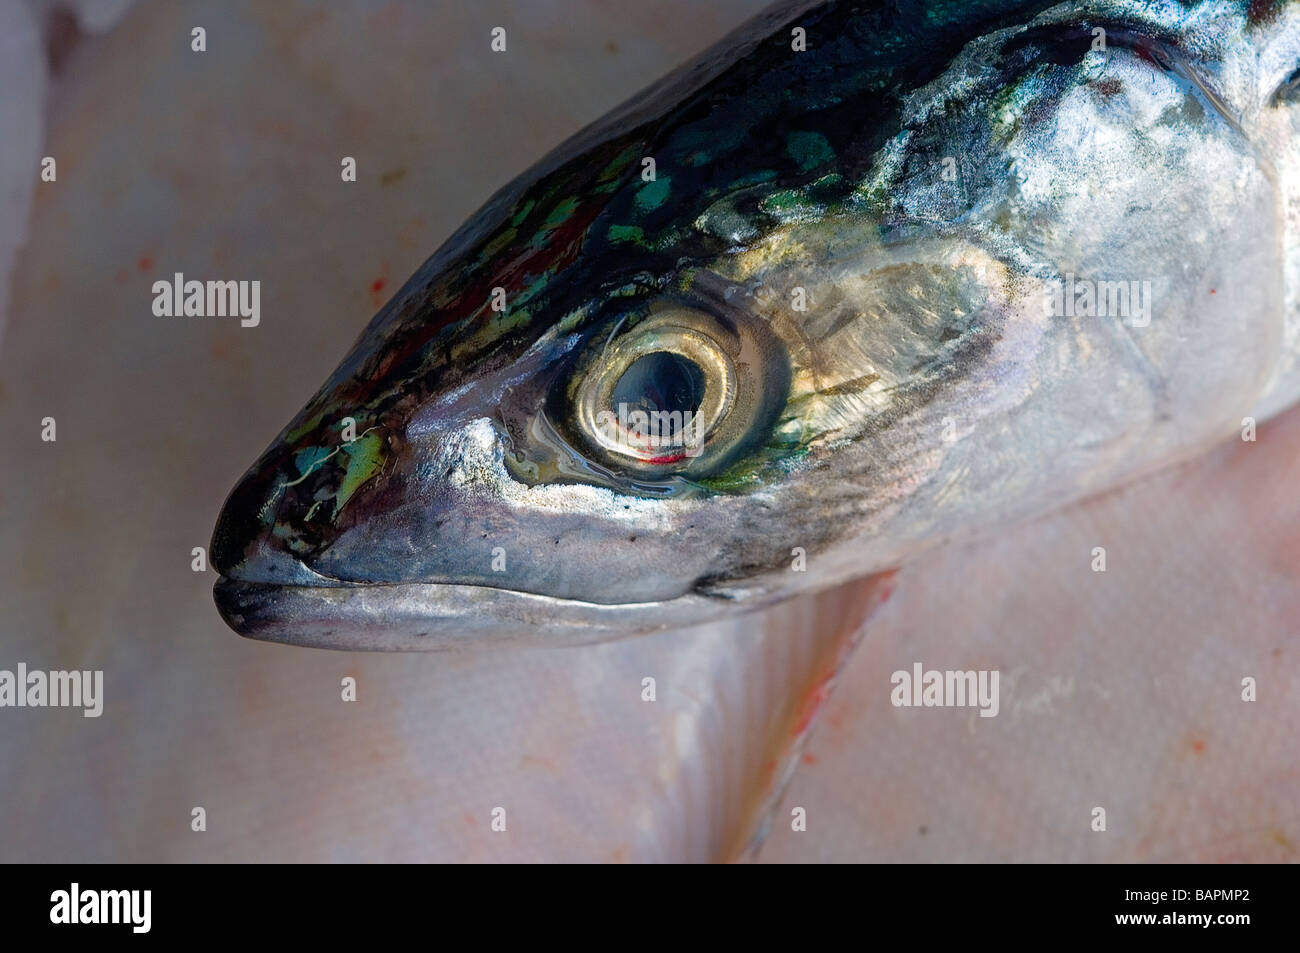 Mackerel fish head markings, close up Stock Photo